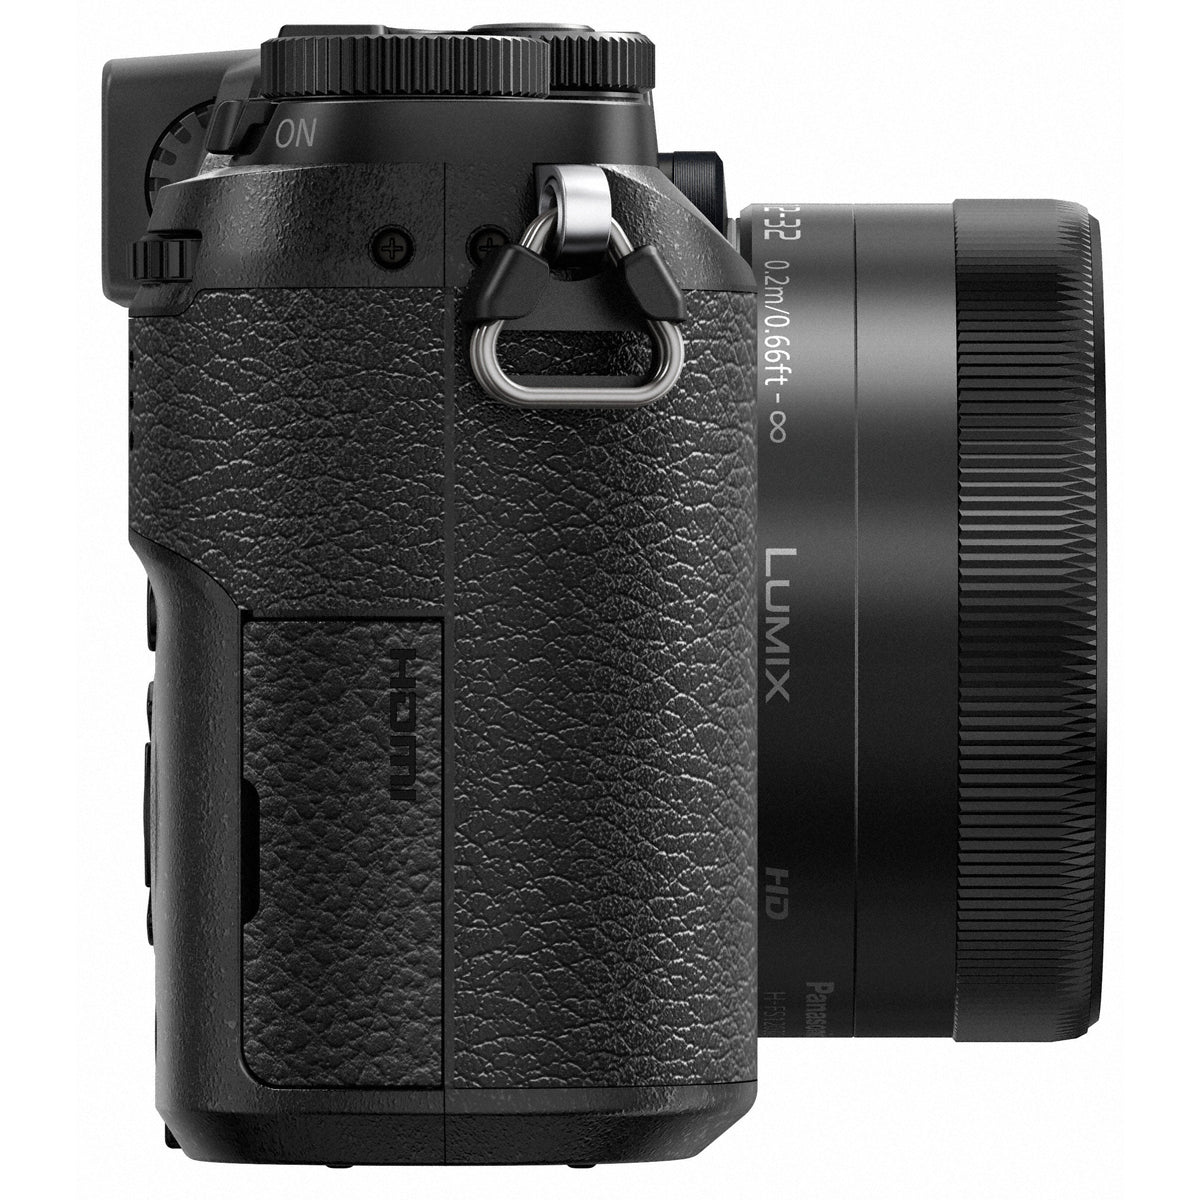 Panasonic Lumix DMC-GX85 Mirrorless Micro Four Thirds Digital Camera w/ 12-32mm & 45-150mm Lenses (Black)